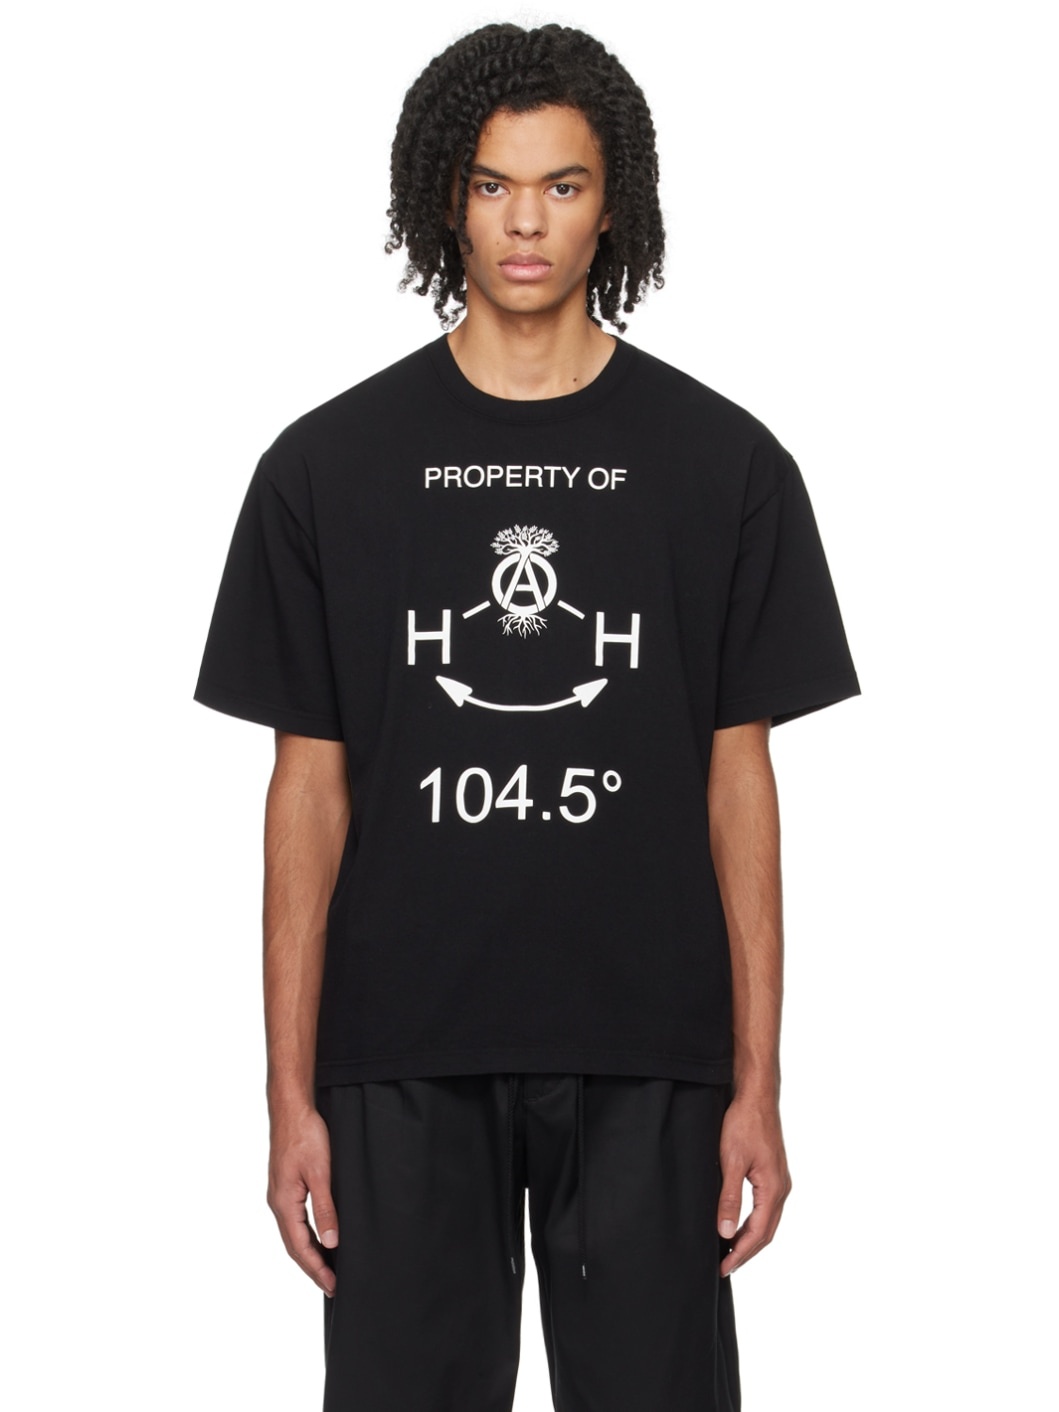 Black Printed T-Shirt - 1